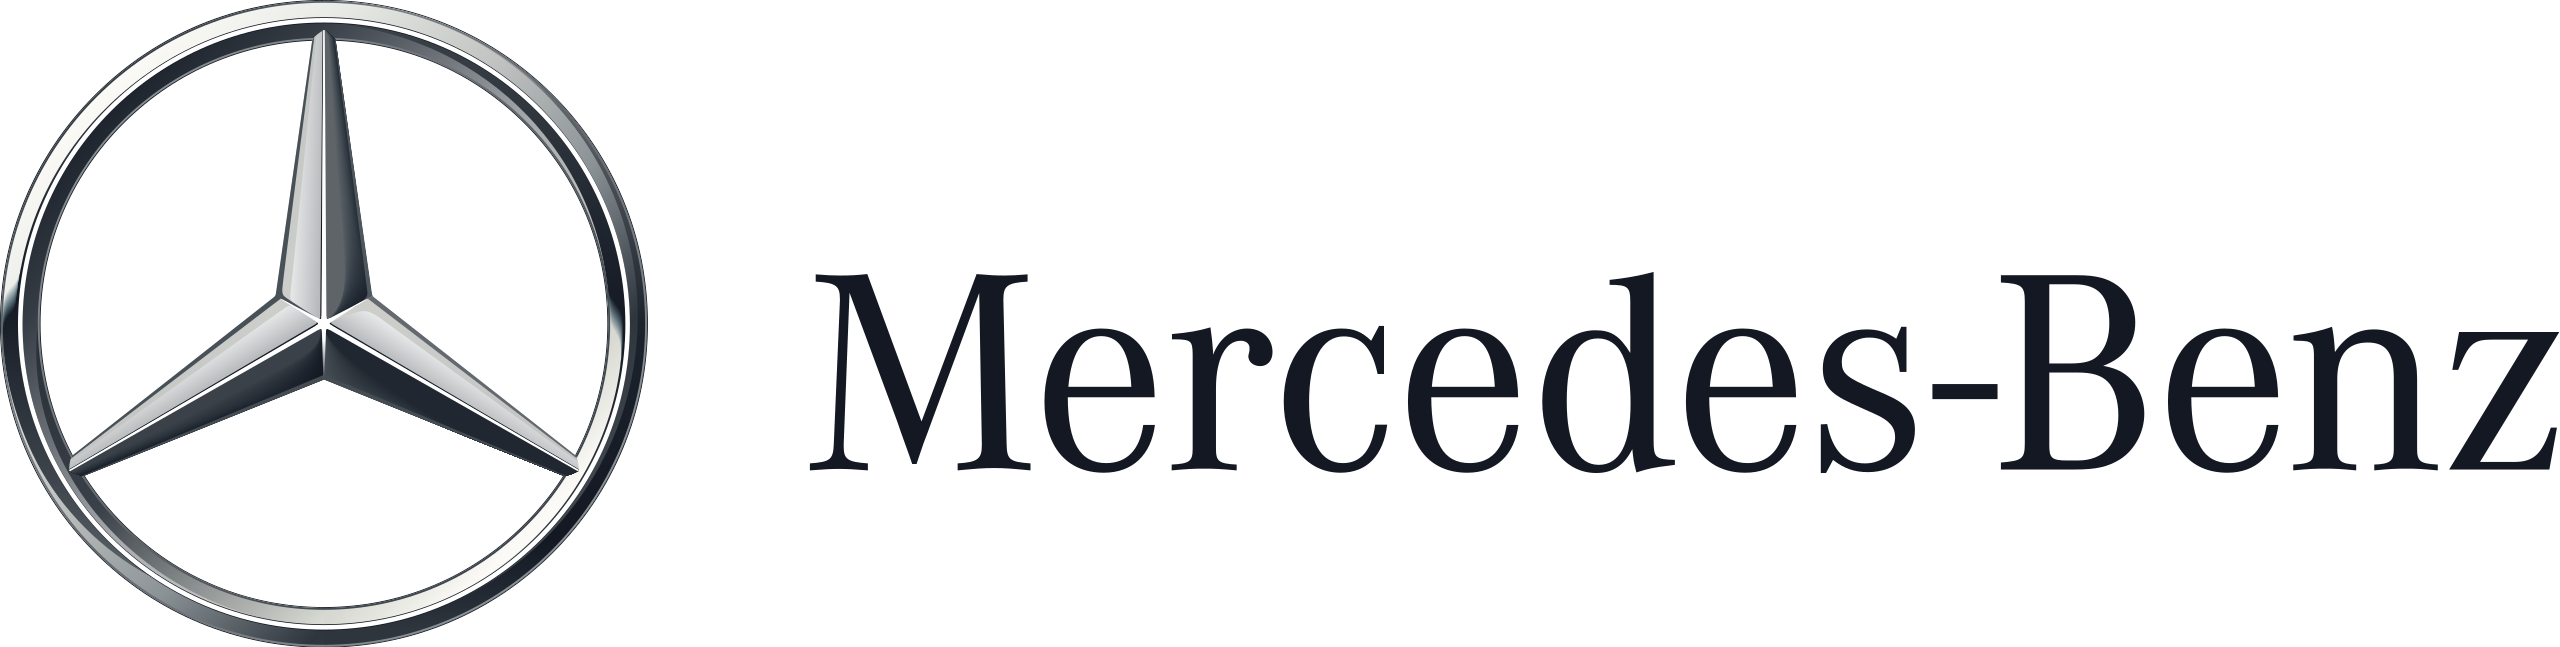 Mercedes-Benz_Logo_2010.svg